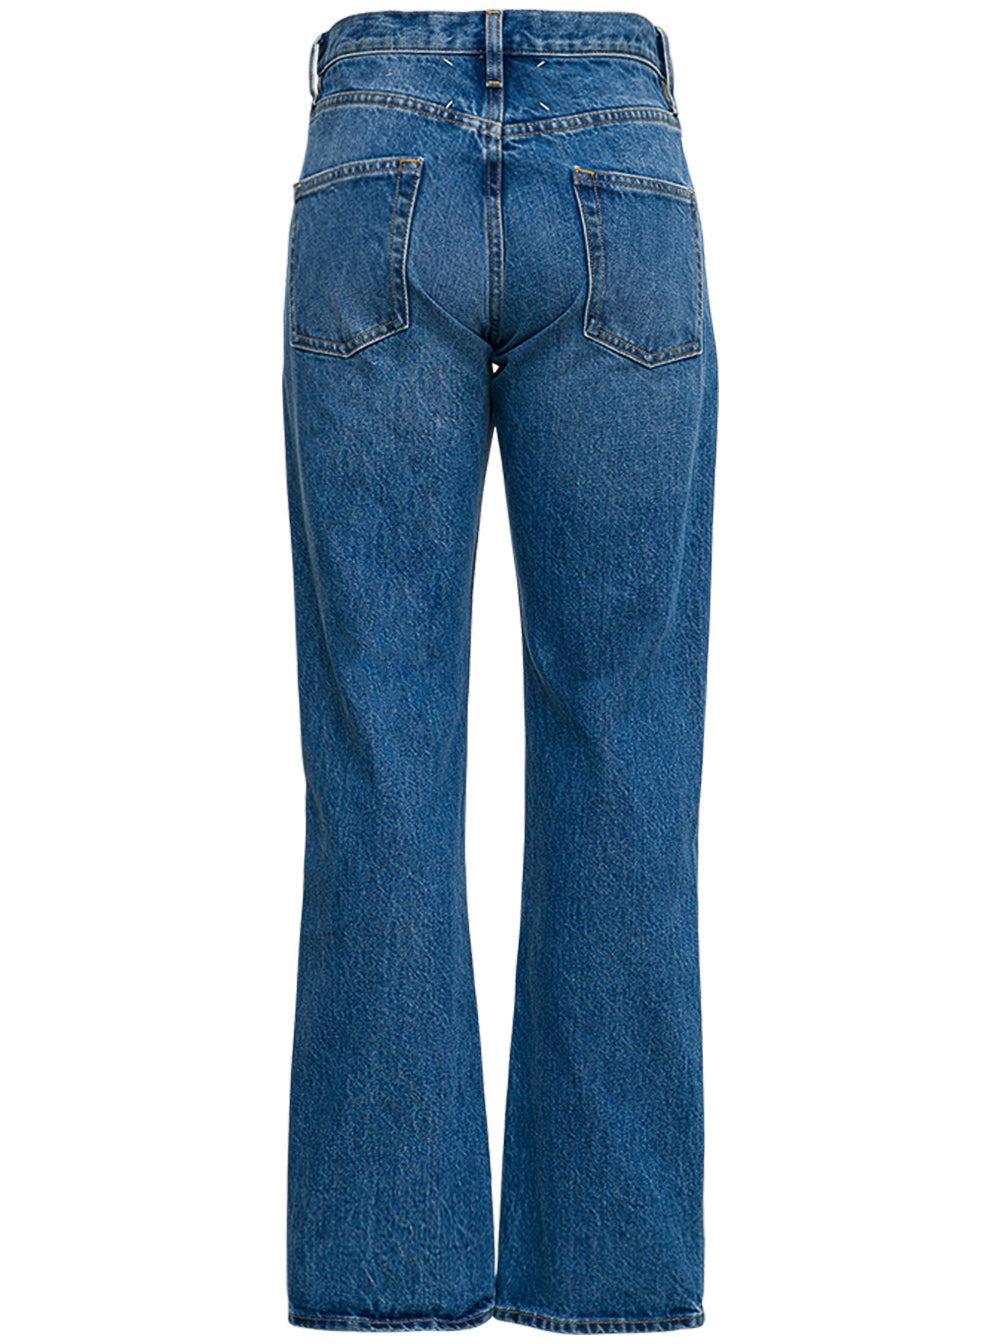 Five Pockets Denim Jeans